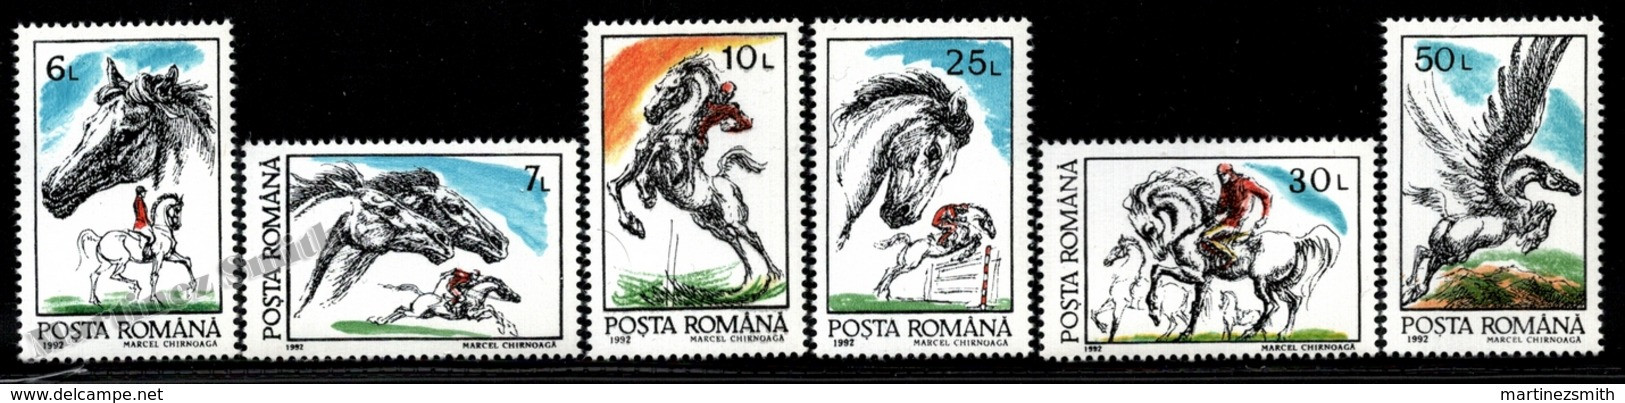 Romania - Roumanie 1992 Yvert 3997-4002, Fauna, Horses - MNH - Nuevos